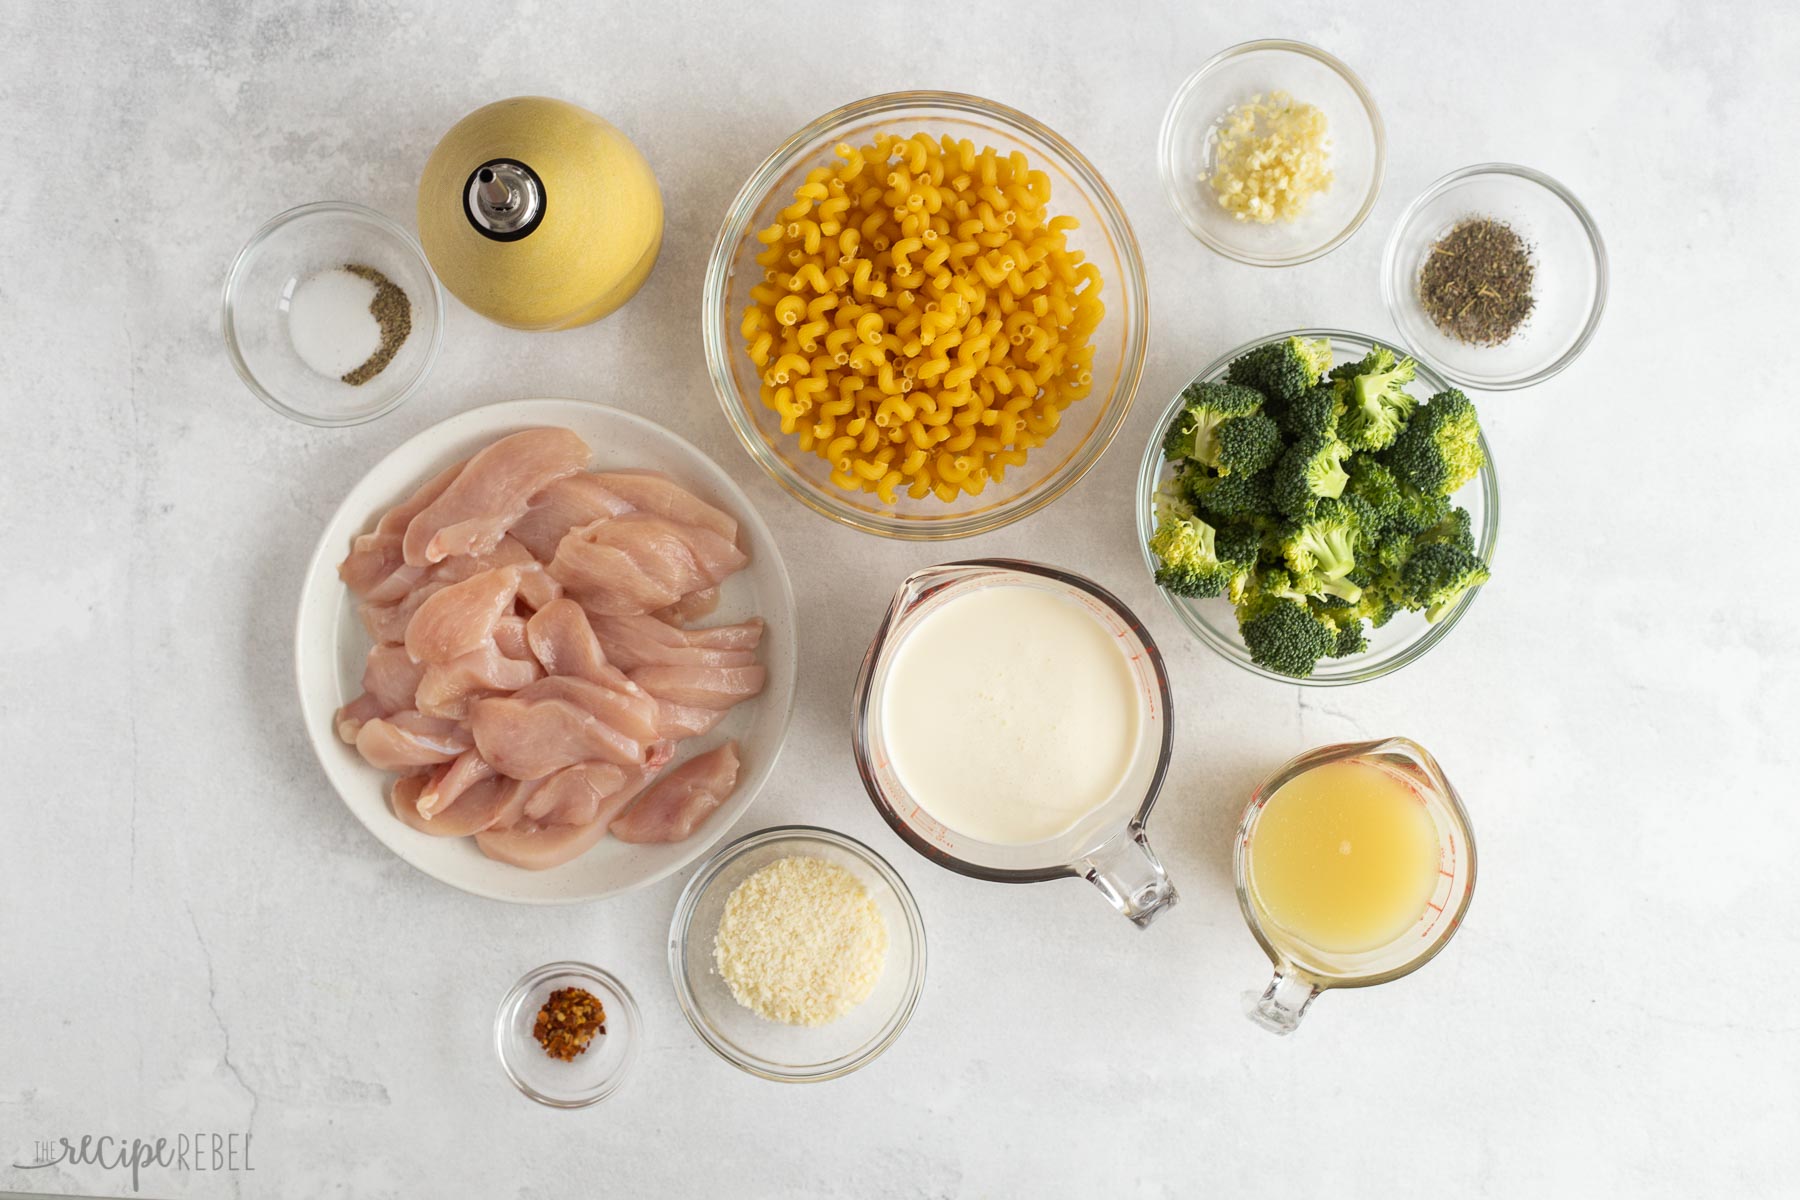 ingredients needed to make chicken broccoli alfredo